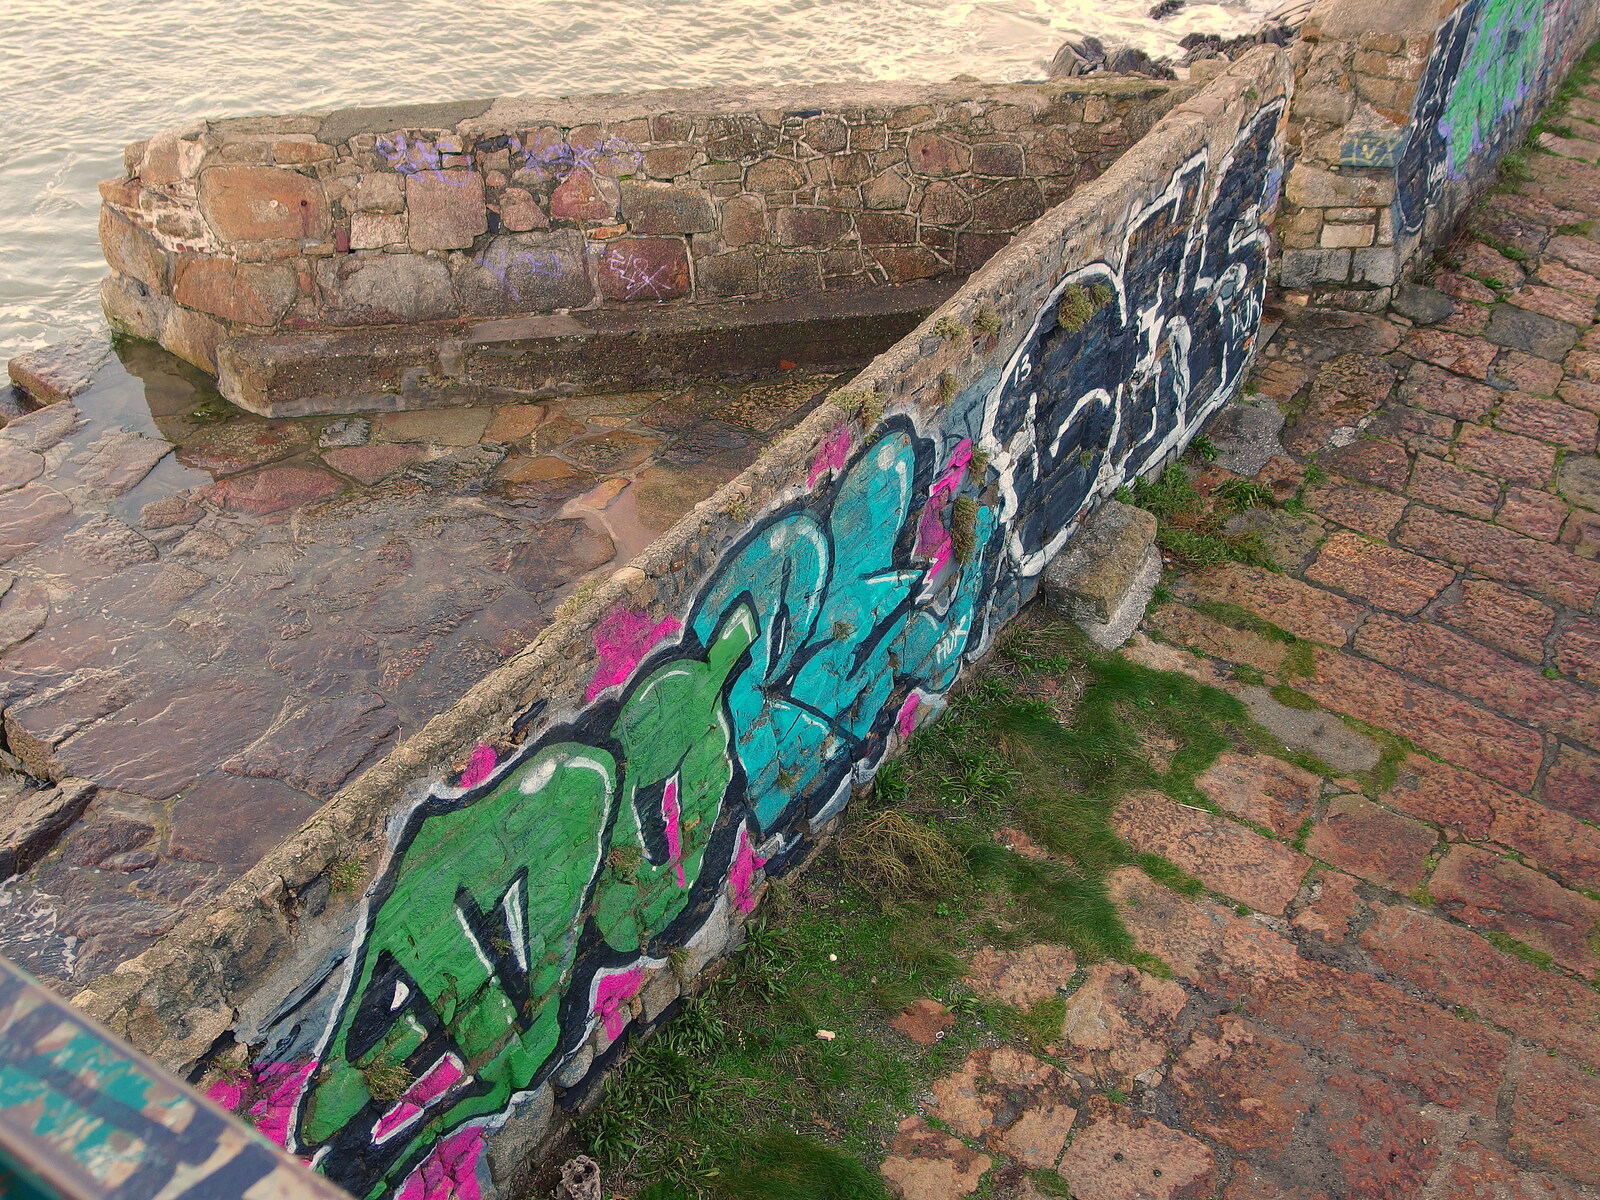 Sea-wall graffiti from A Trip to Monkstown Farm and Blackrock, County Dublin, Ireland - 2nd January 2014